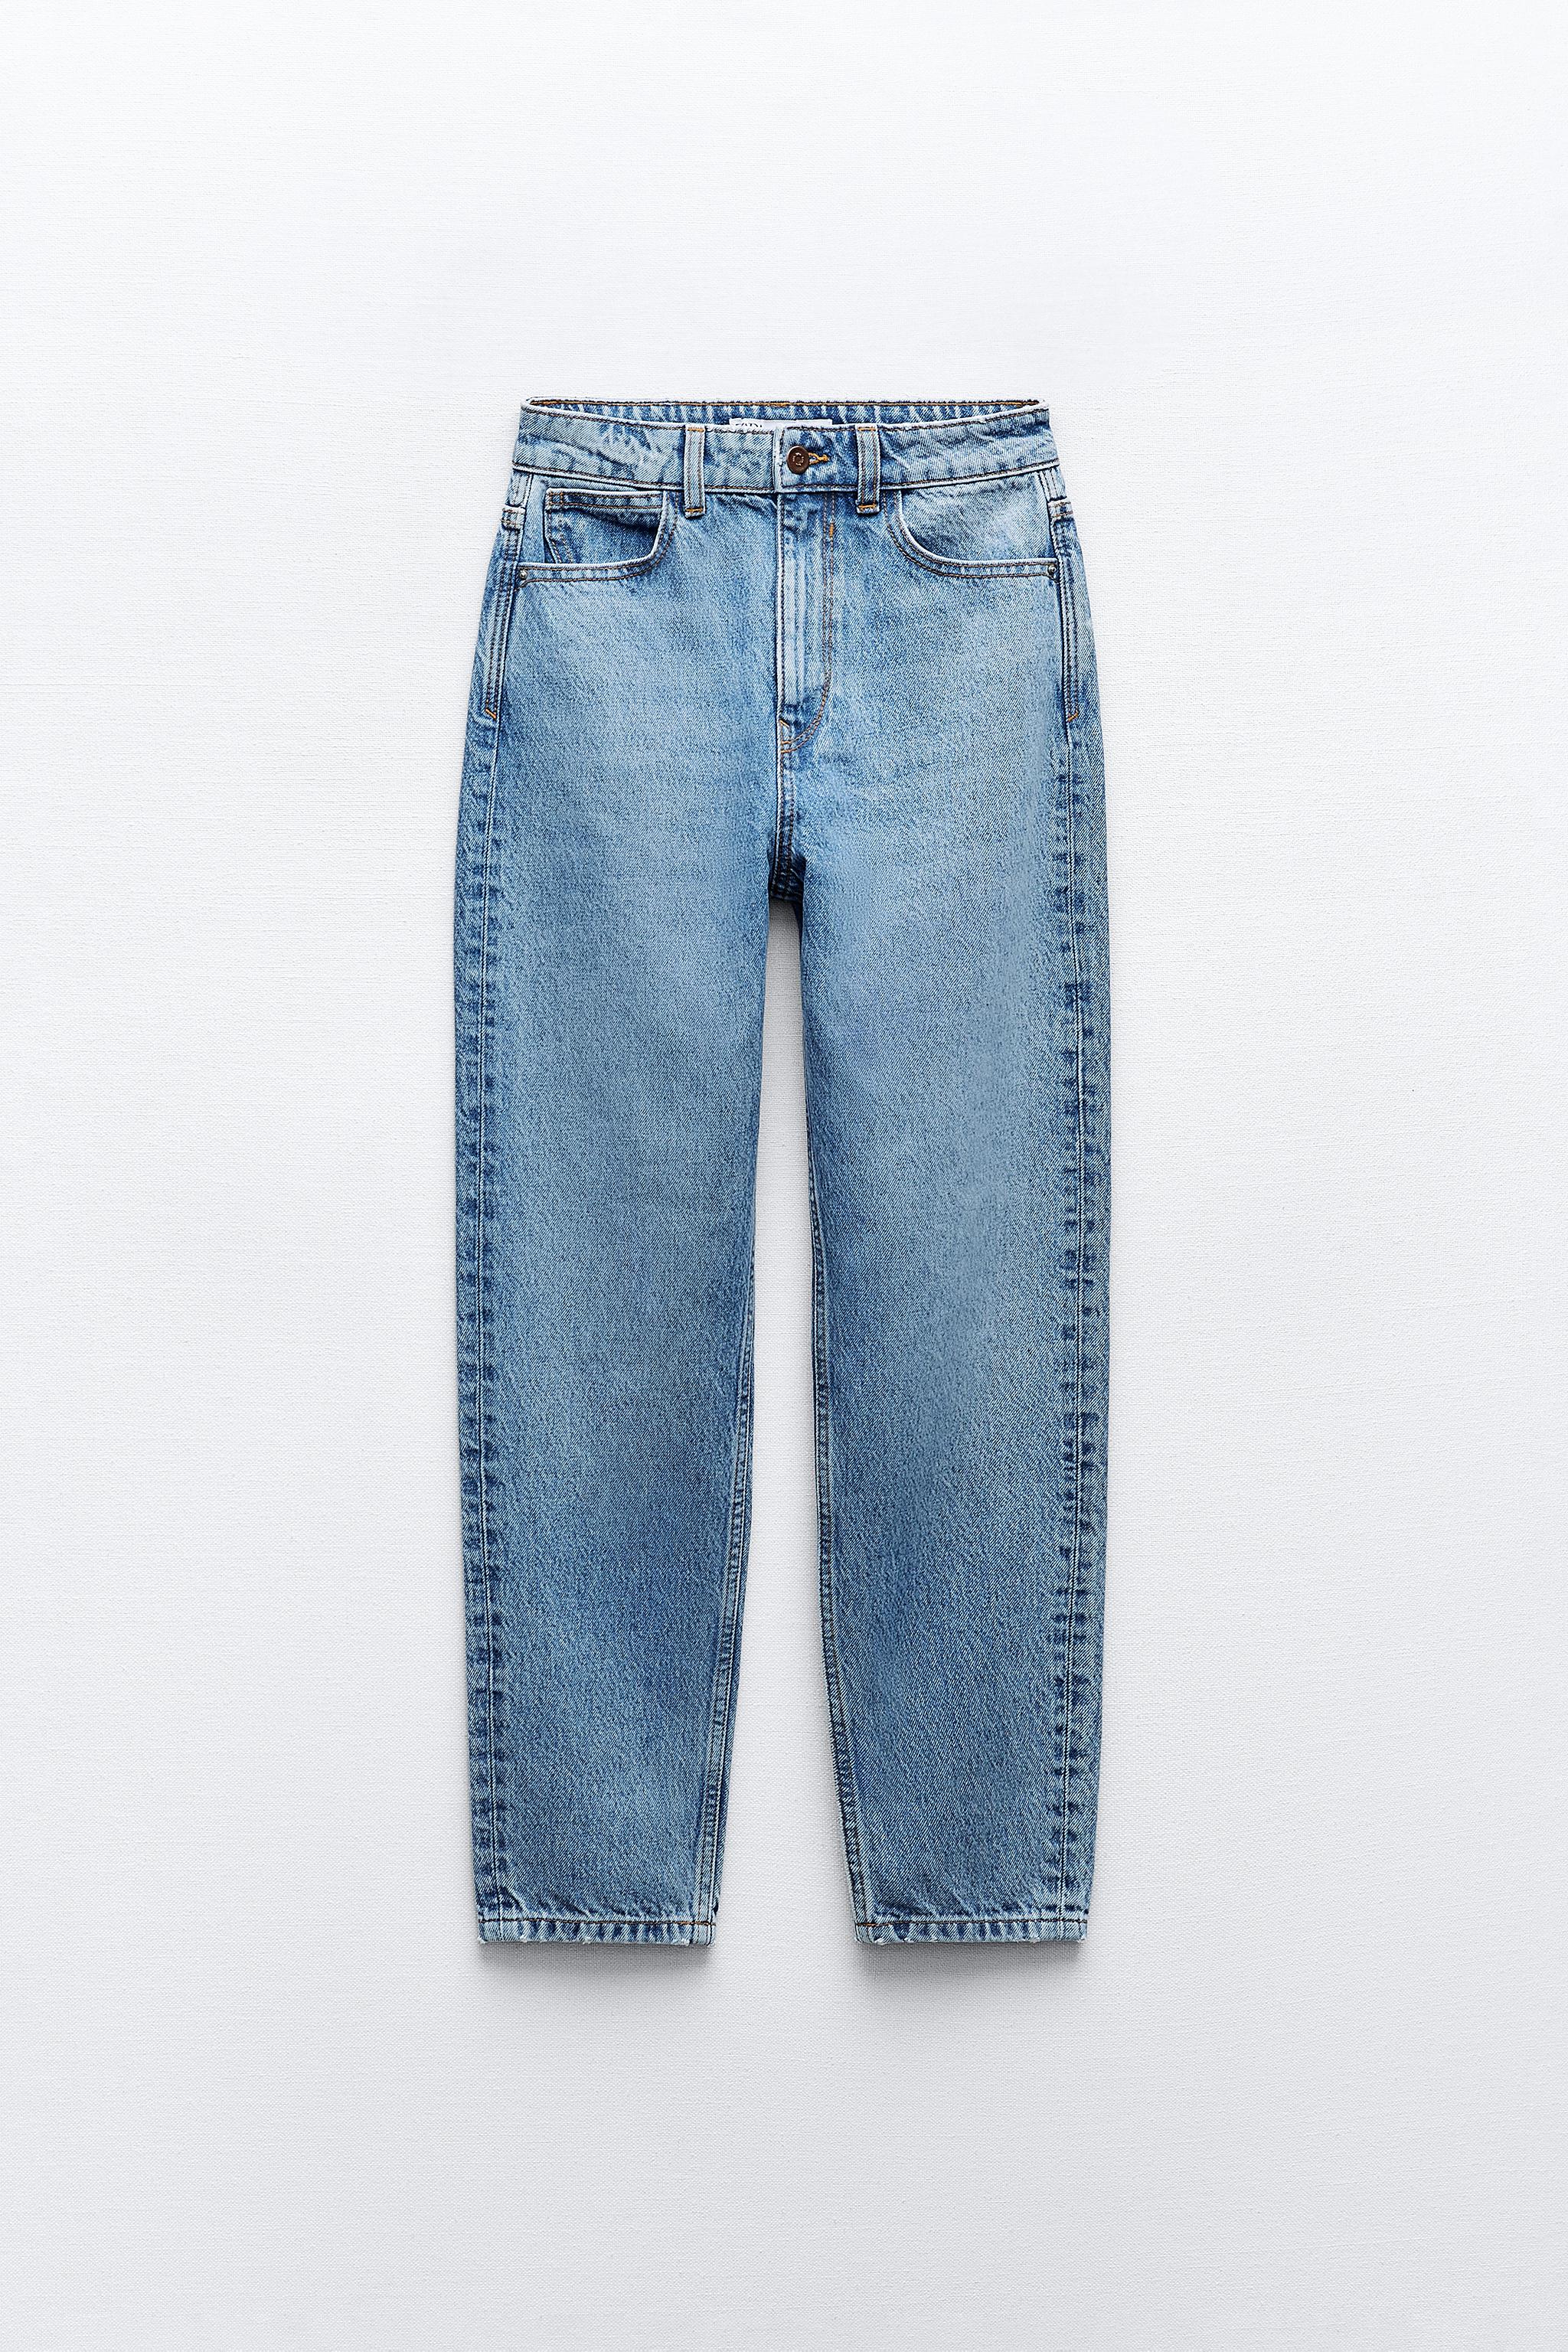 Z1975 MOM-FIT HIGH-WAIST 高腰牛仔褲- 中藍色| ZARA Taiwan, China 